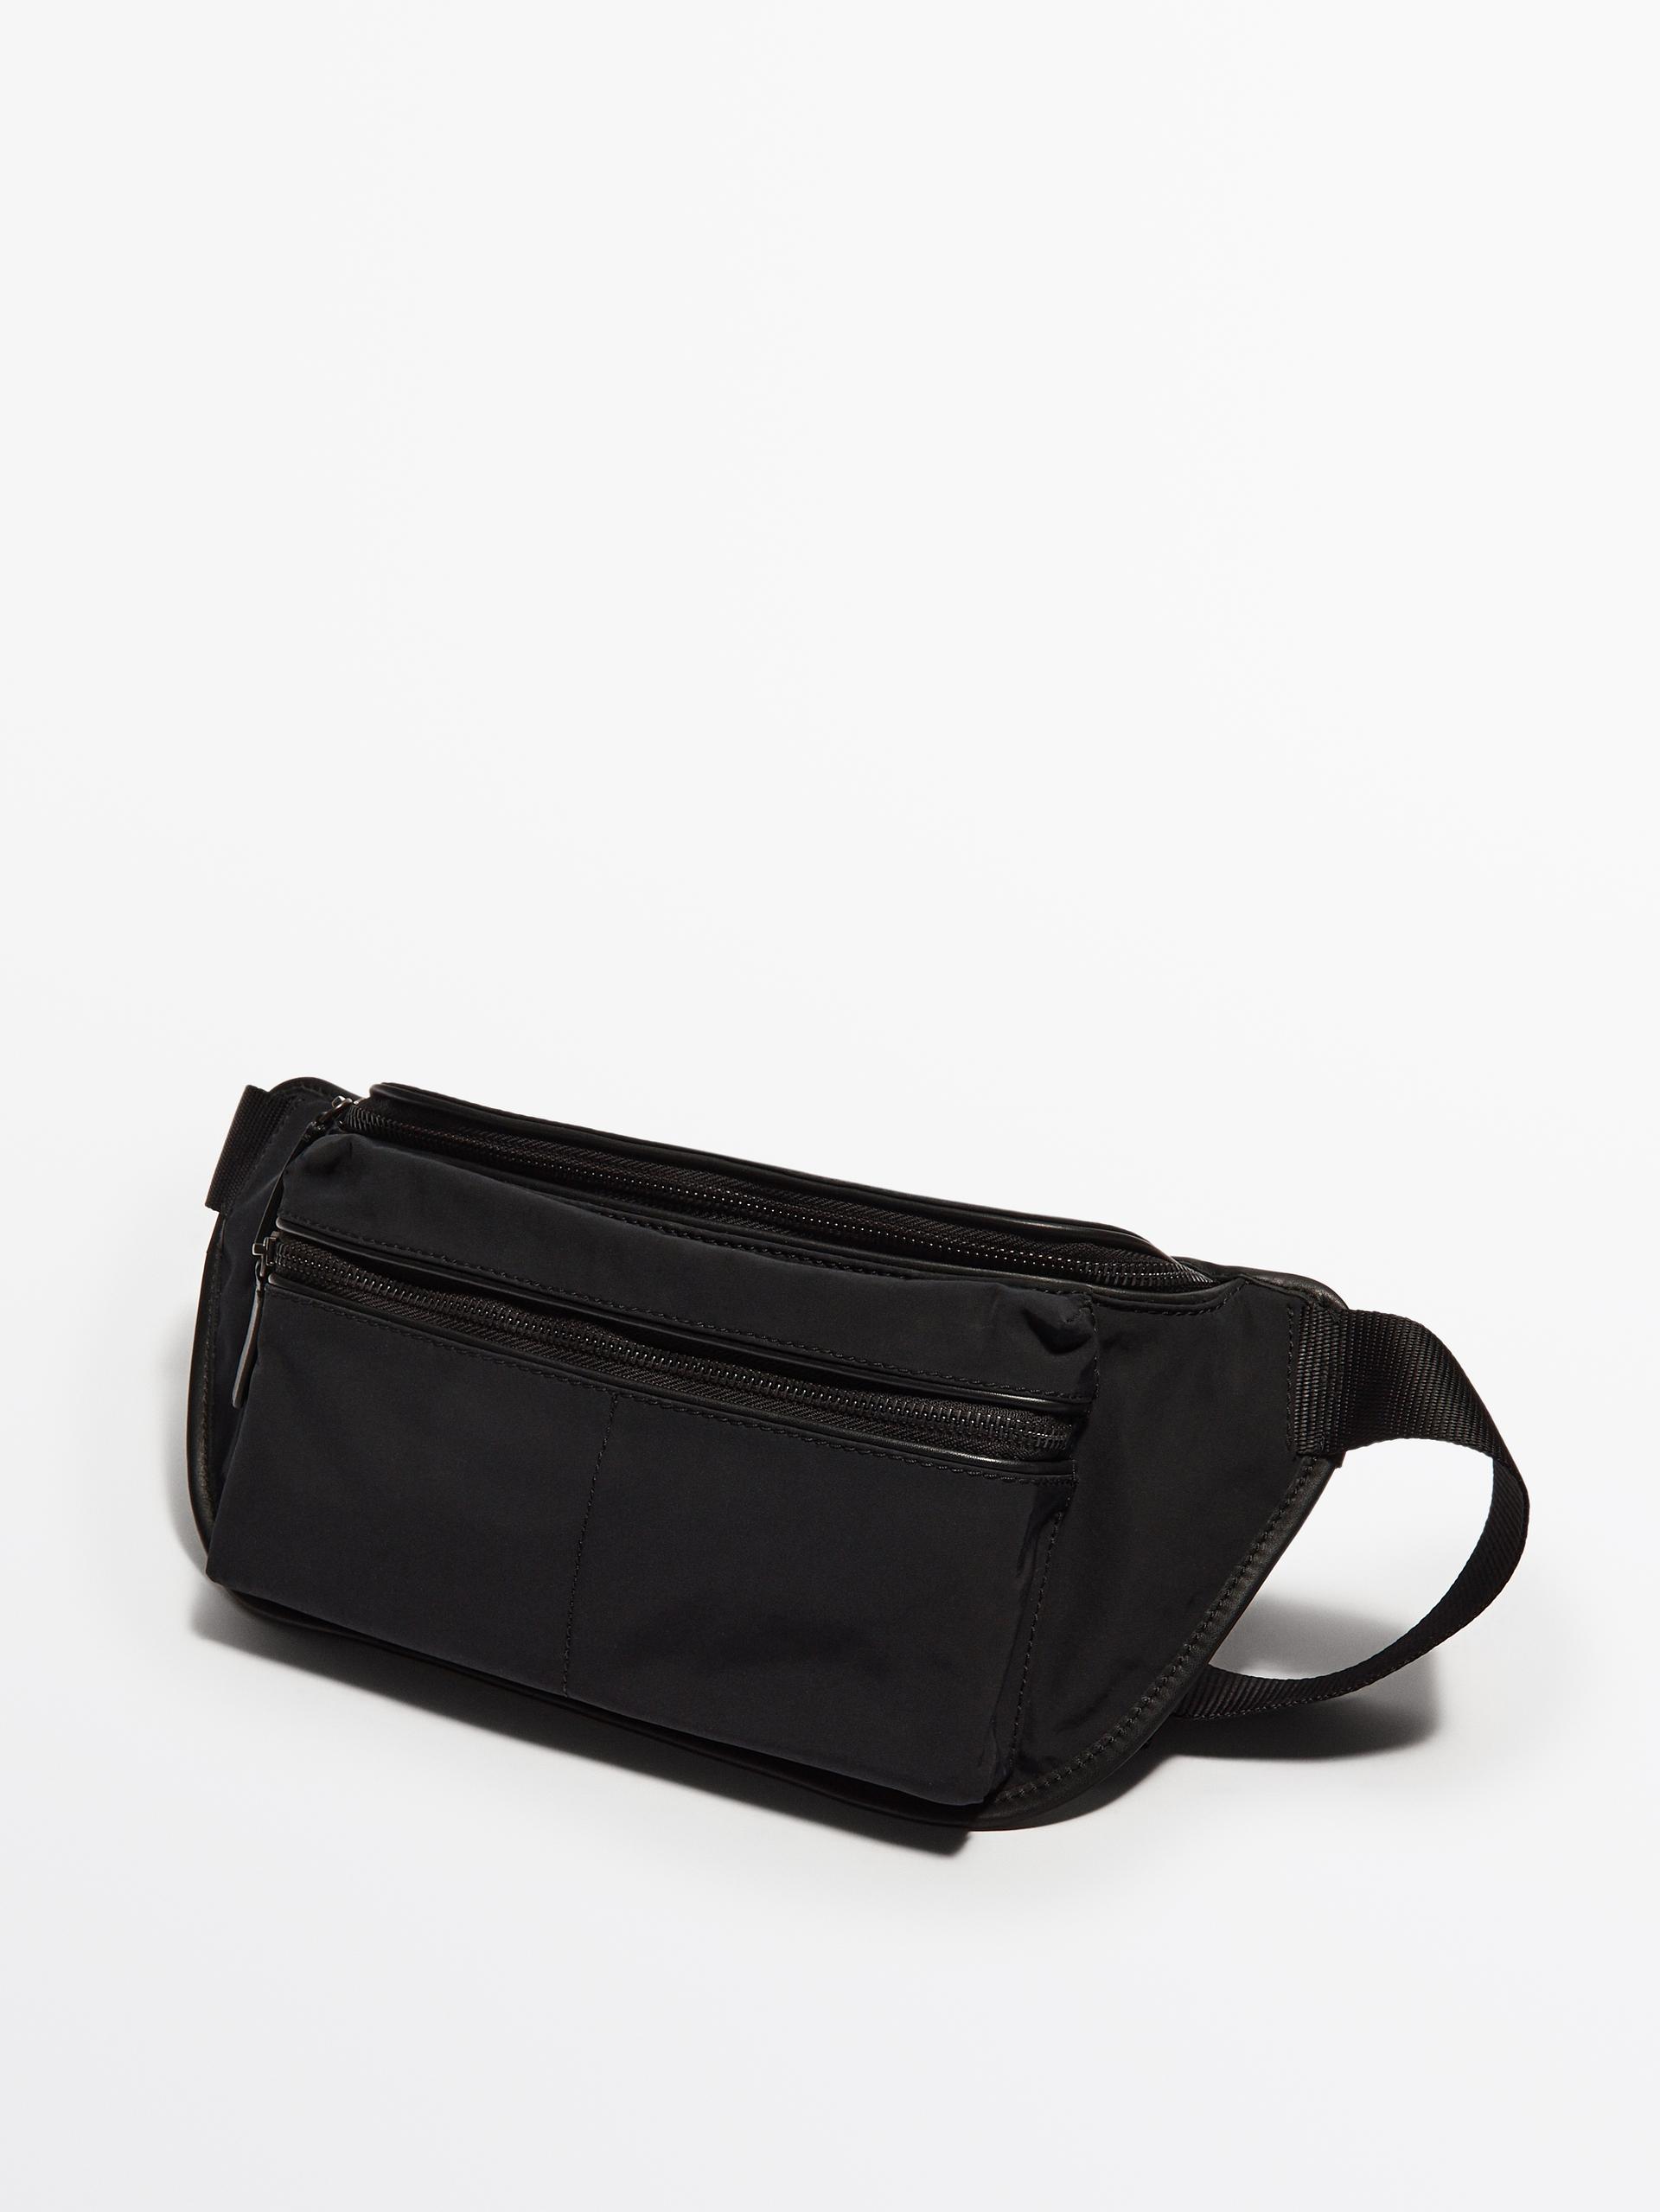 Contrast nylon belt bag with leather details - Studio ZARA